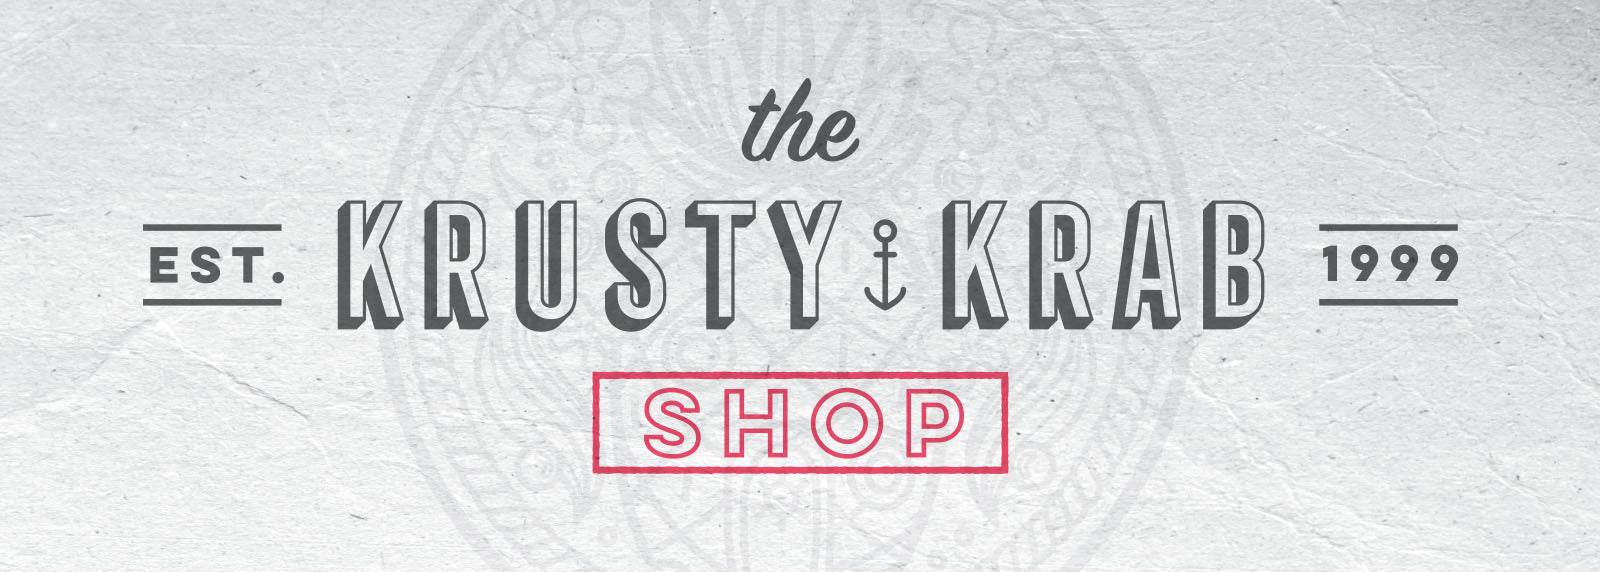 The Krusty Krab Shop